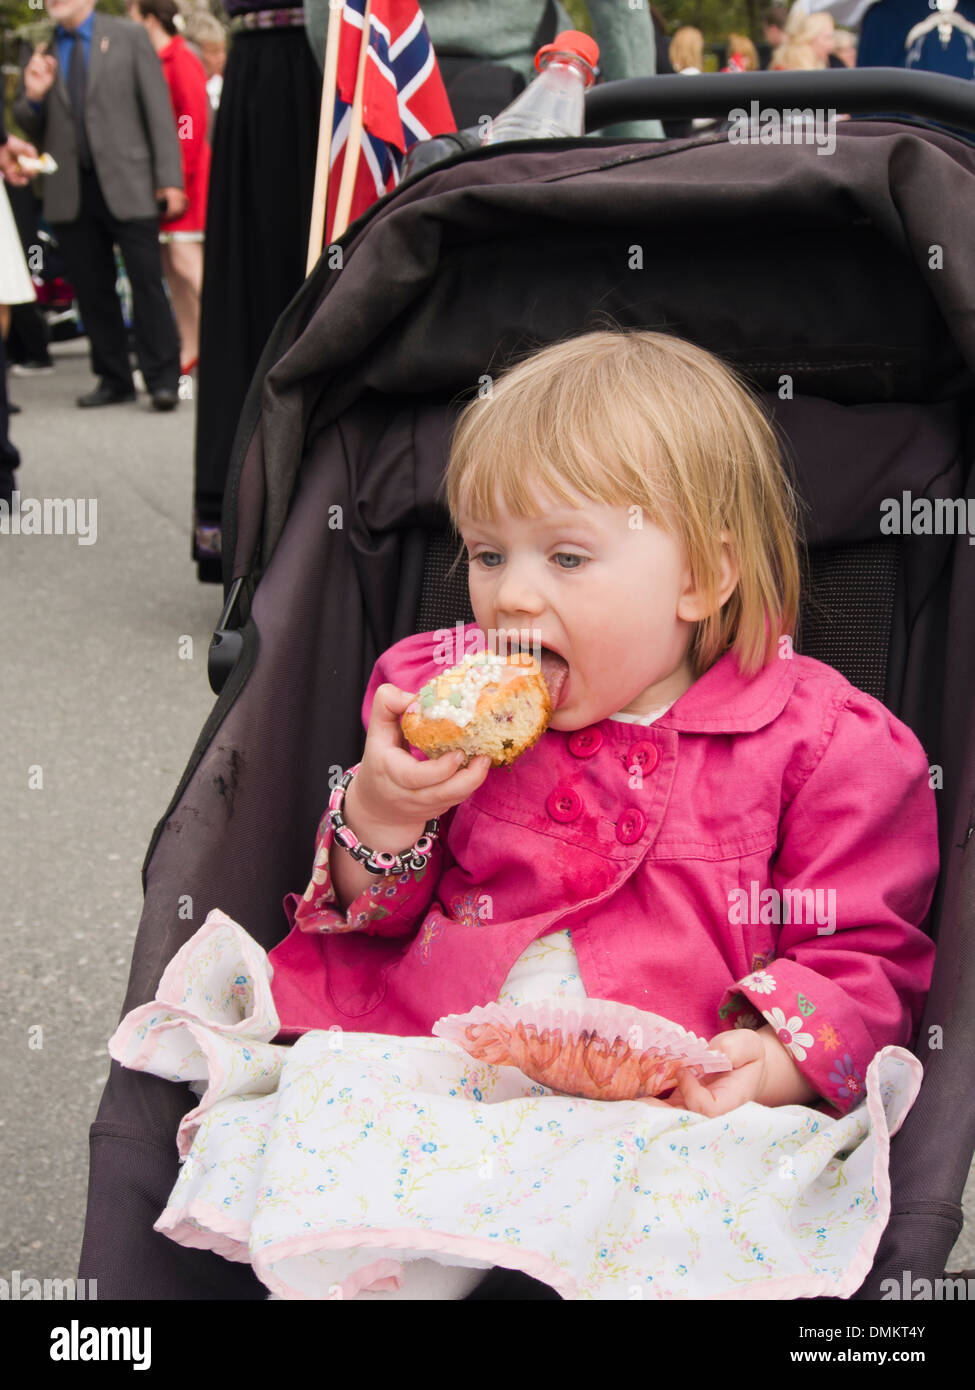 toddler-girl-in-pram-eating-a-muffin-pre